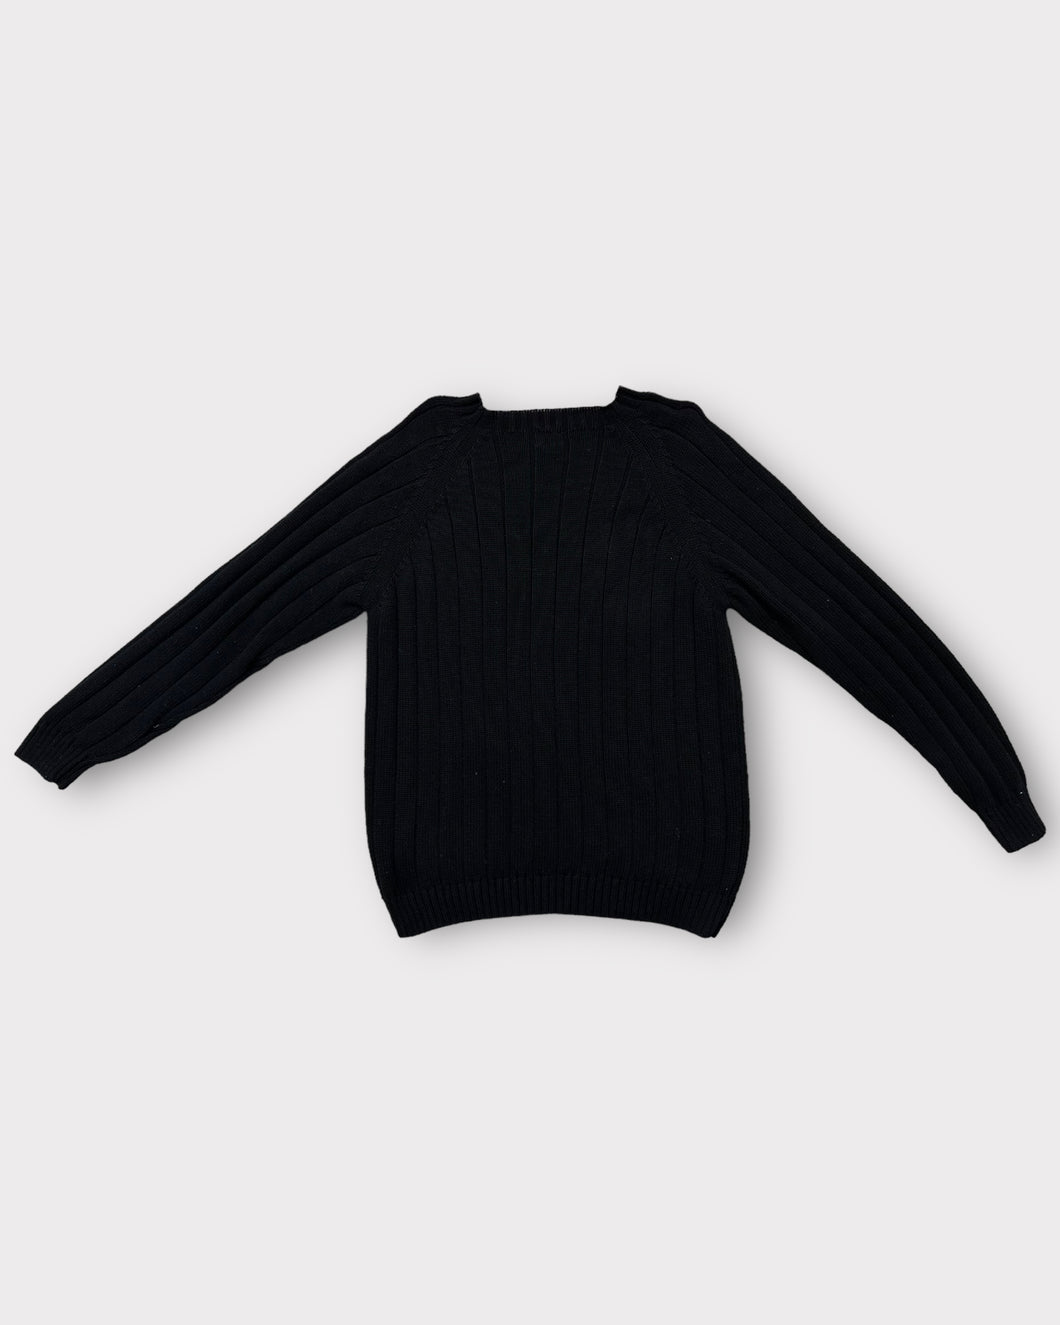 Dockers Black Vintage Rib Knit Mock Neck Sweater (XL)